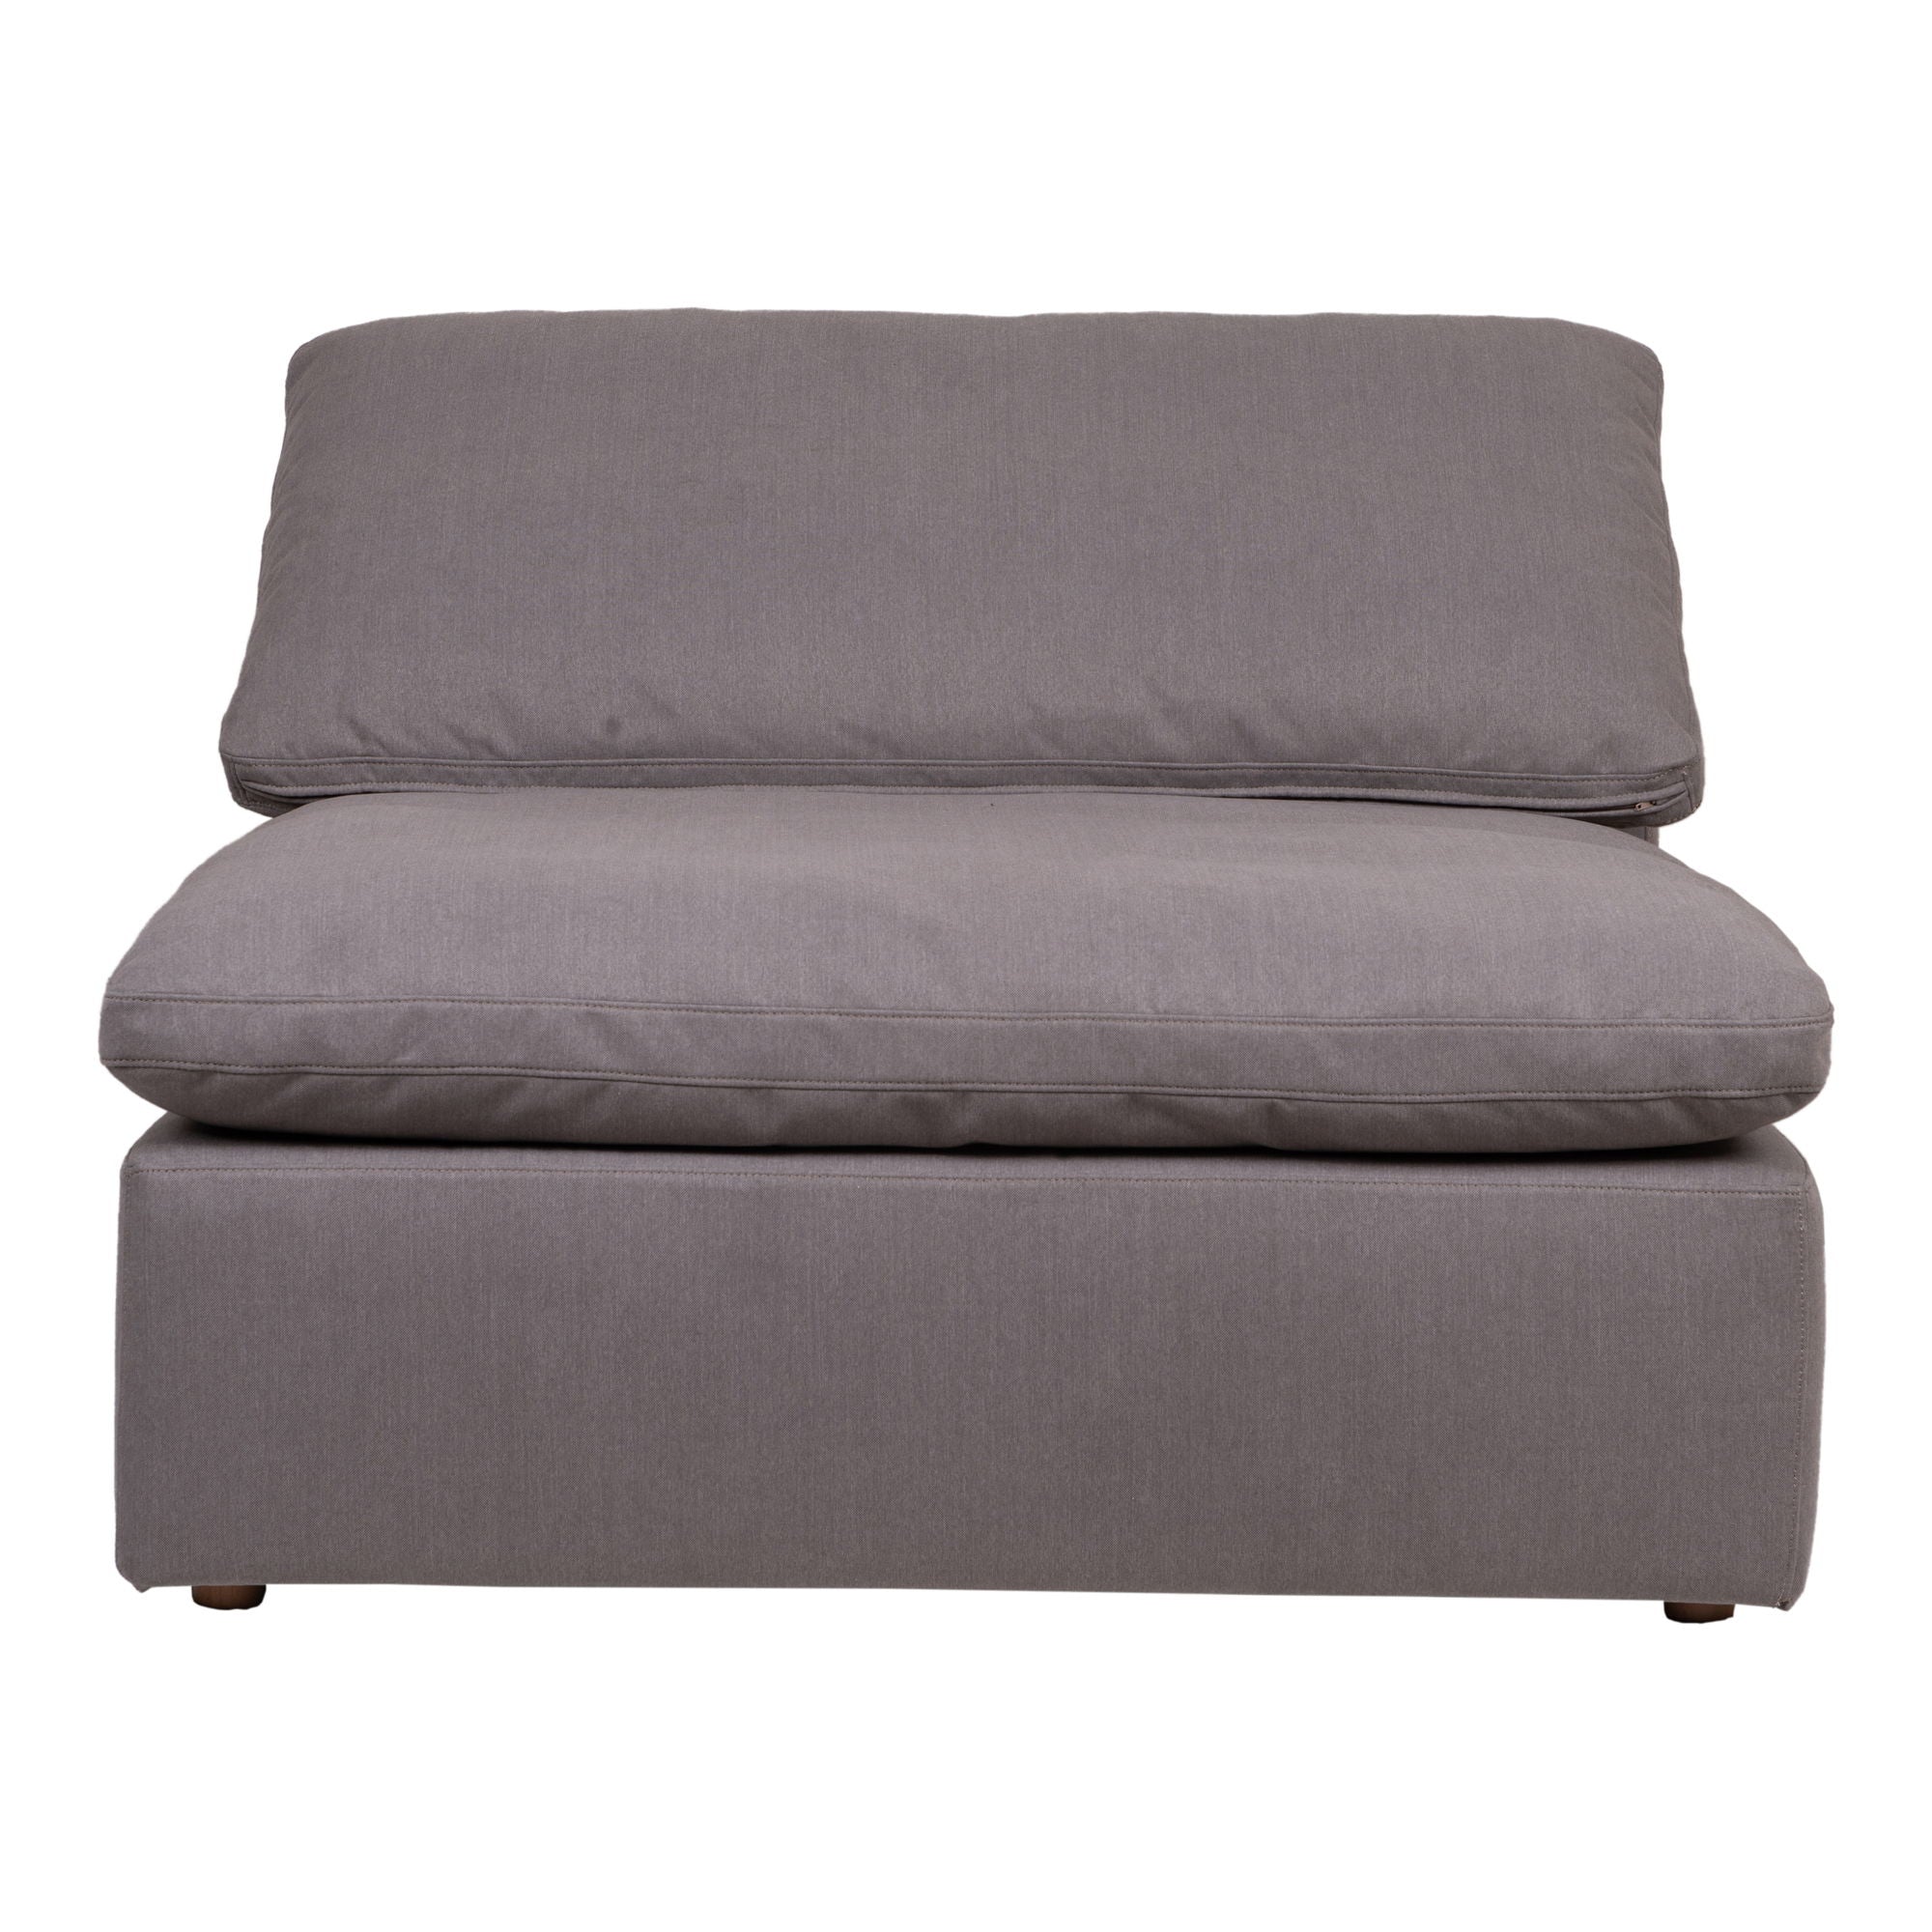 Clay - Slipper Chair Livesmart Fabric - Light Gray